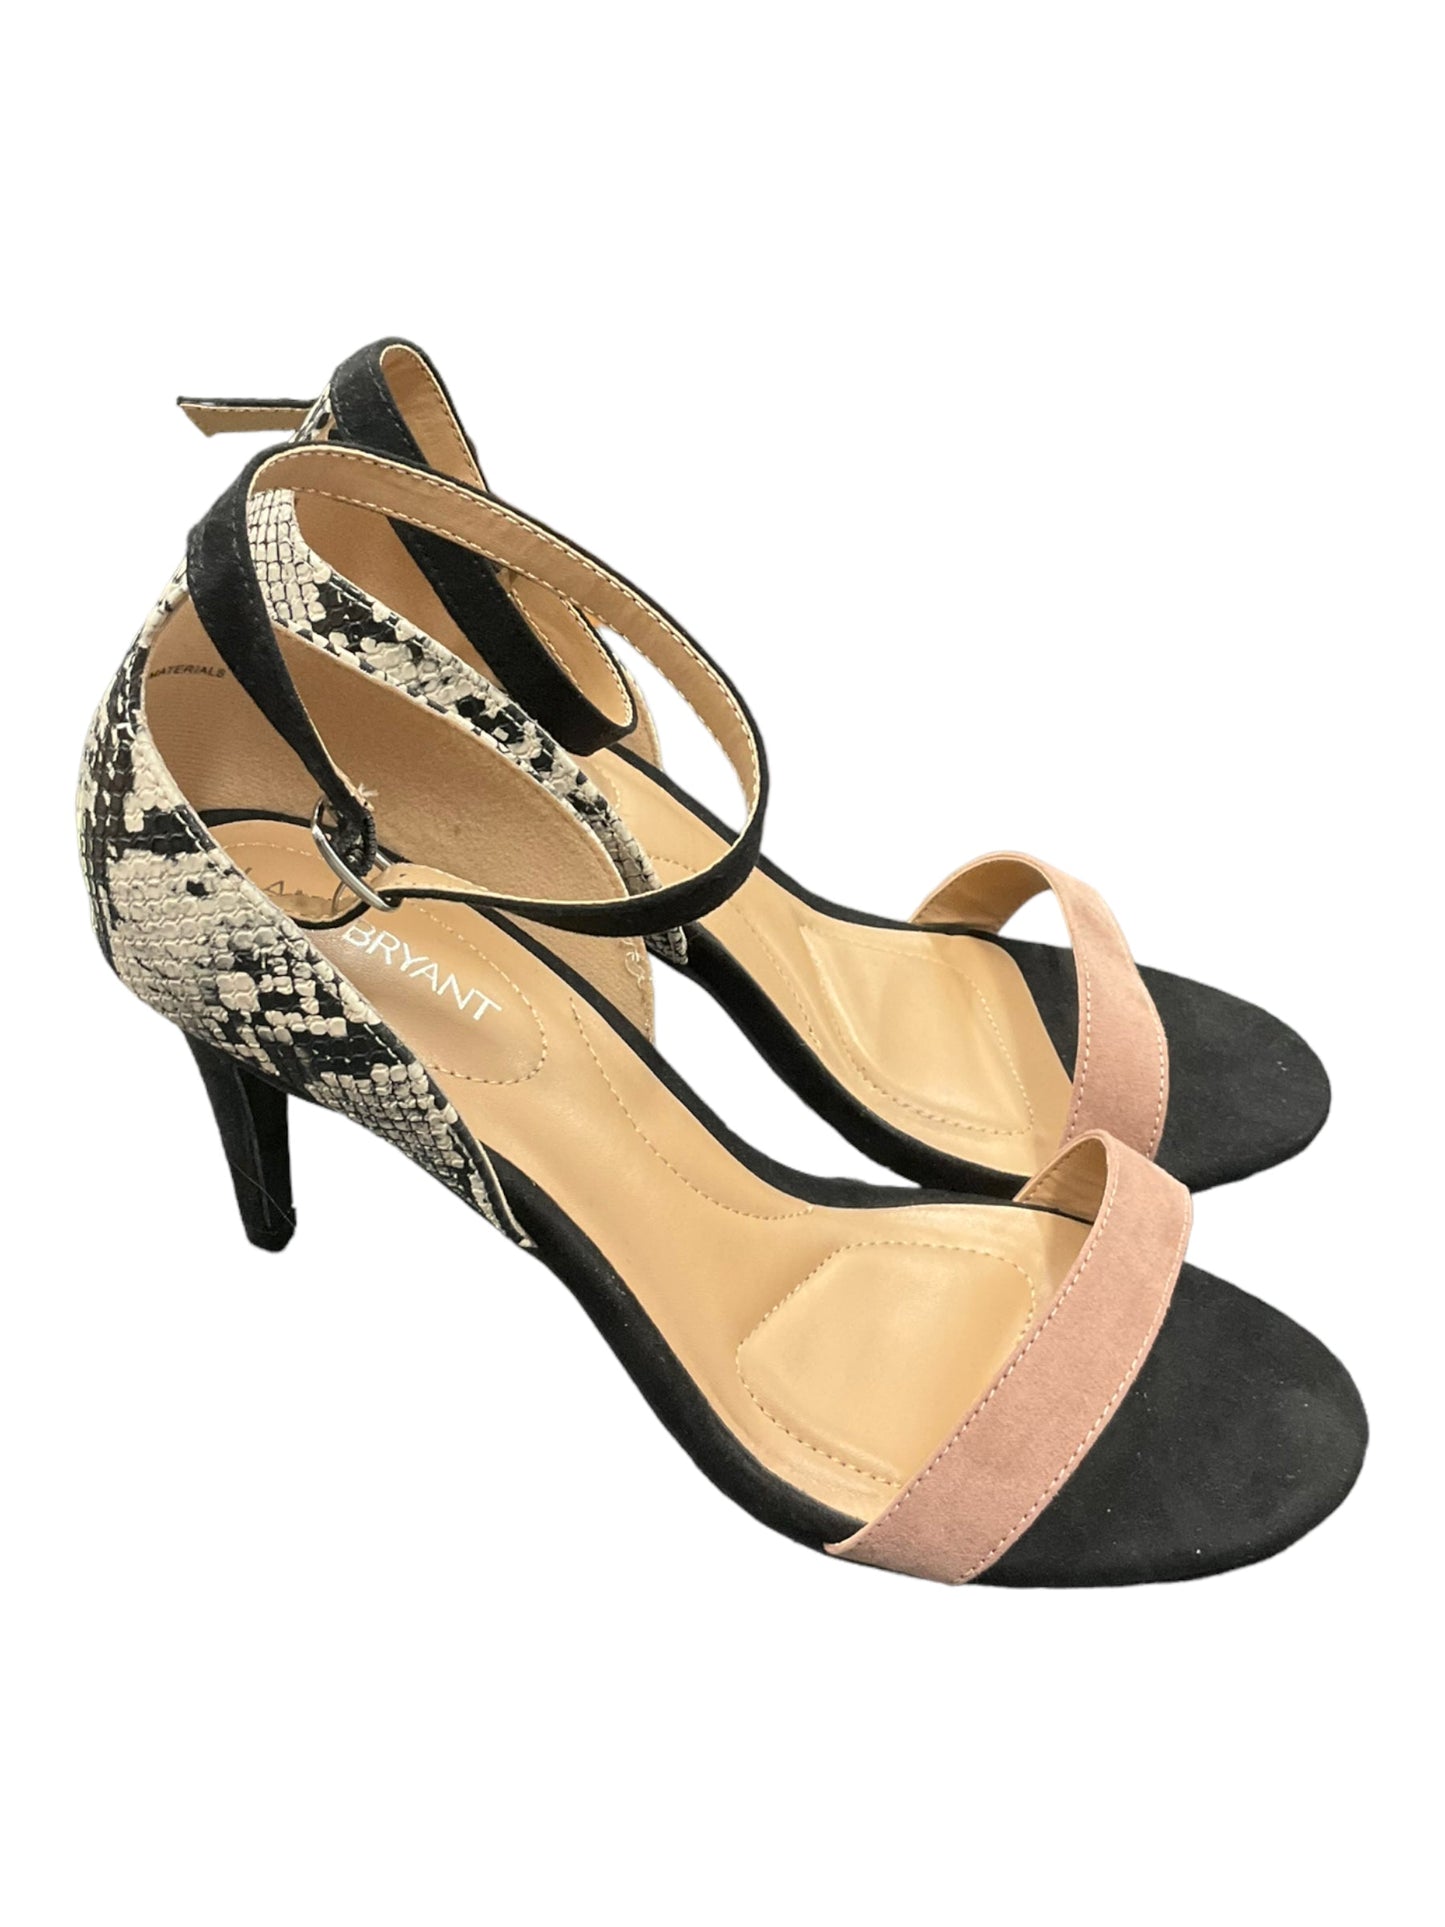 Sandals Heels Stiletto By Lane Bryant  Size: 10